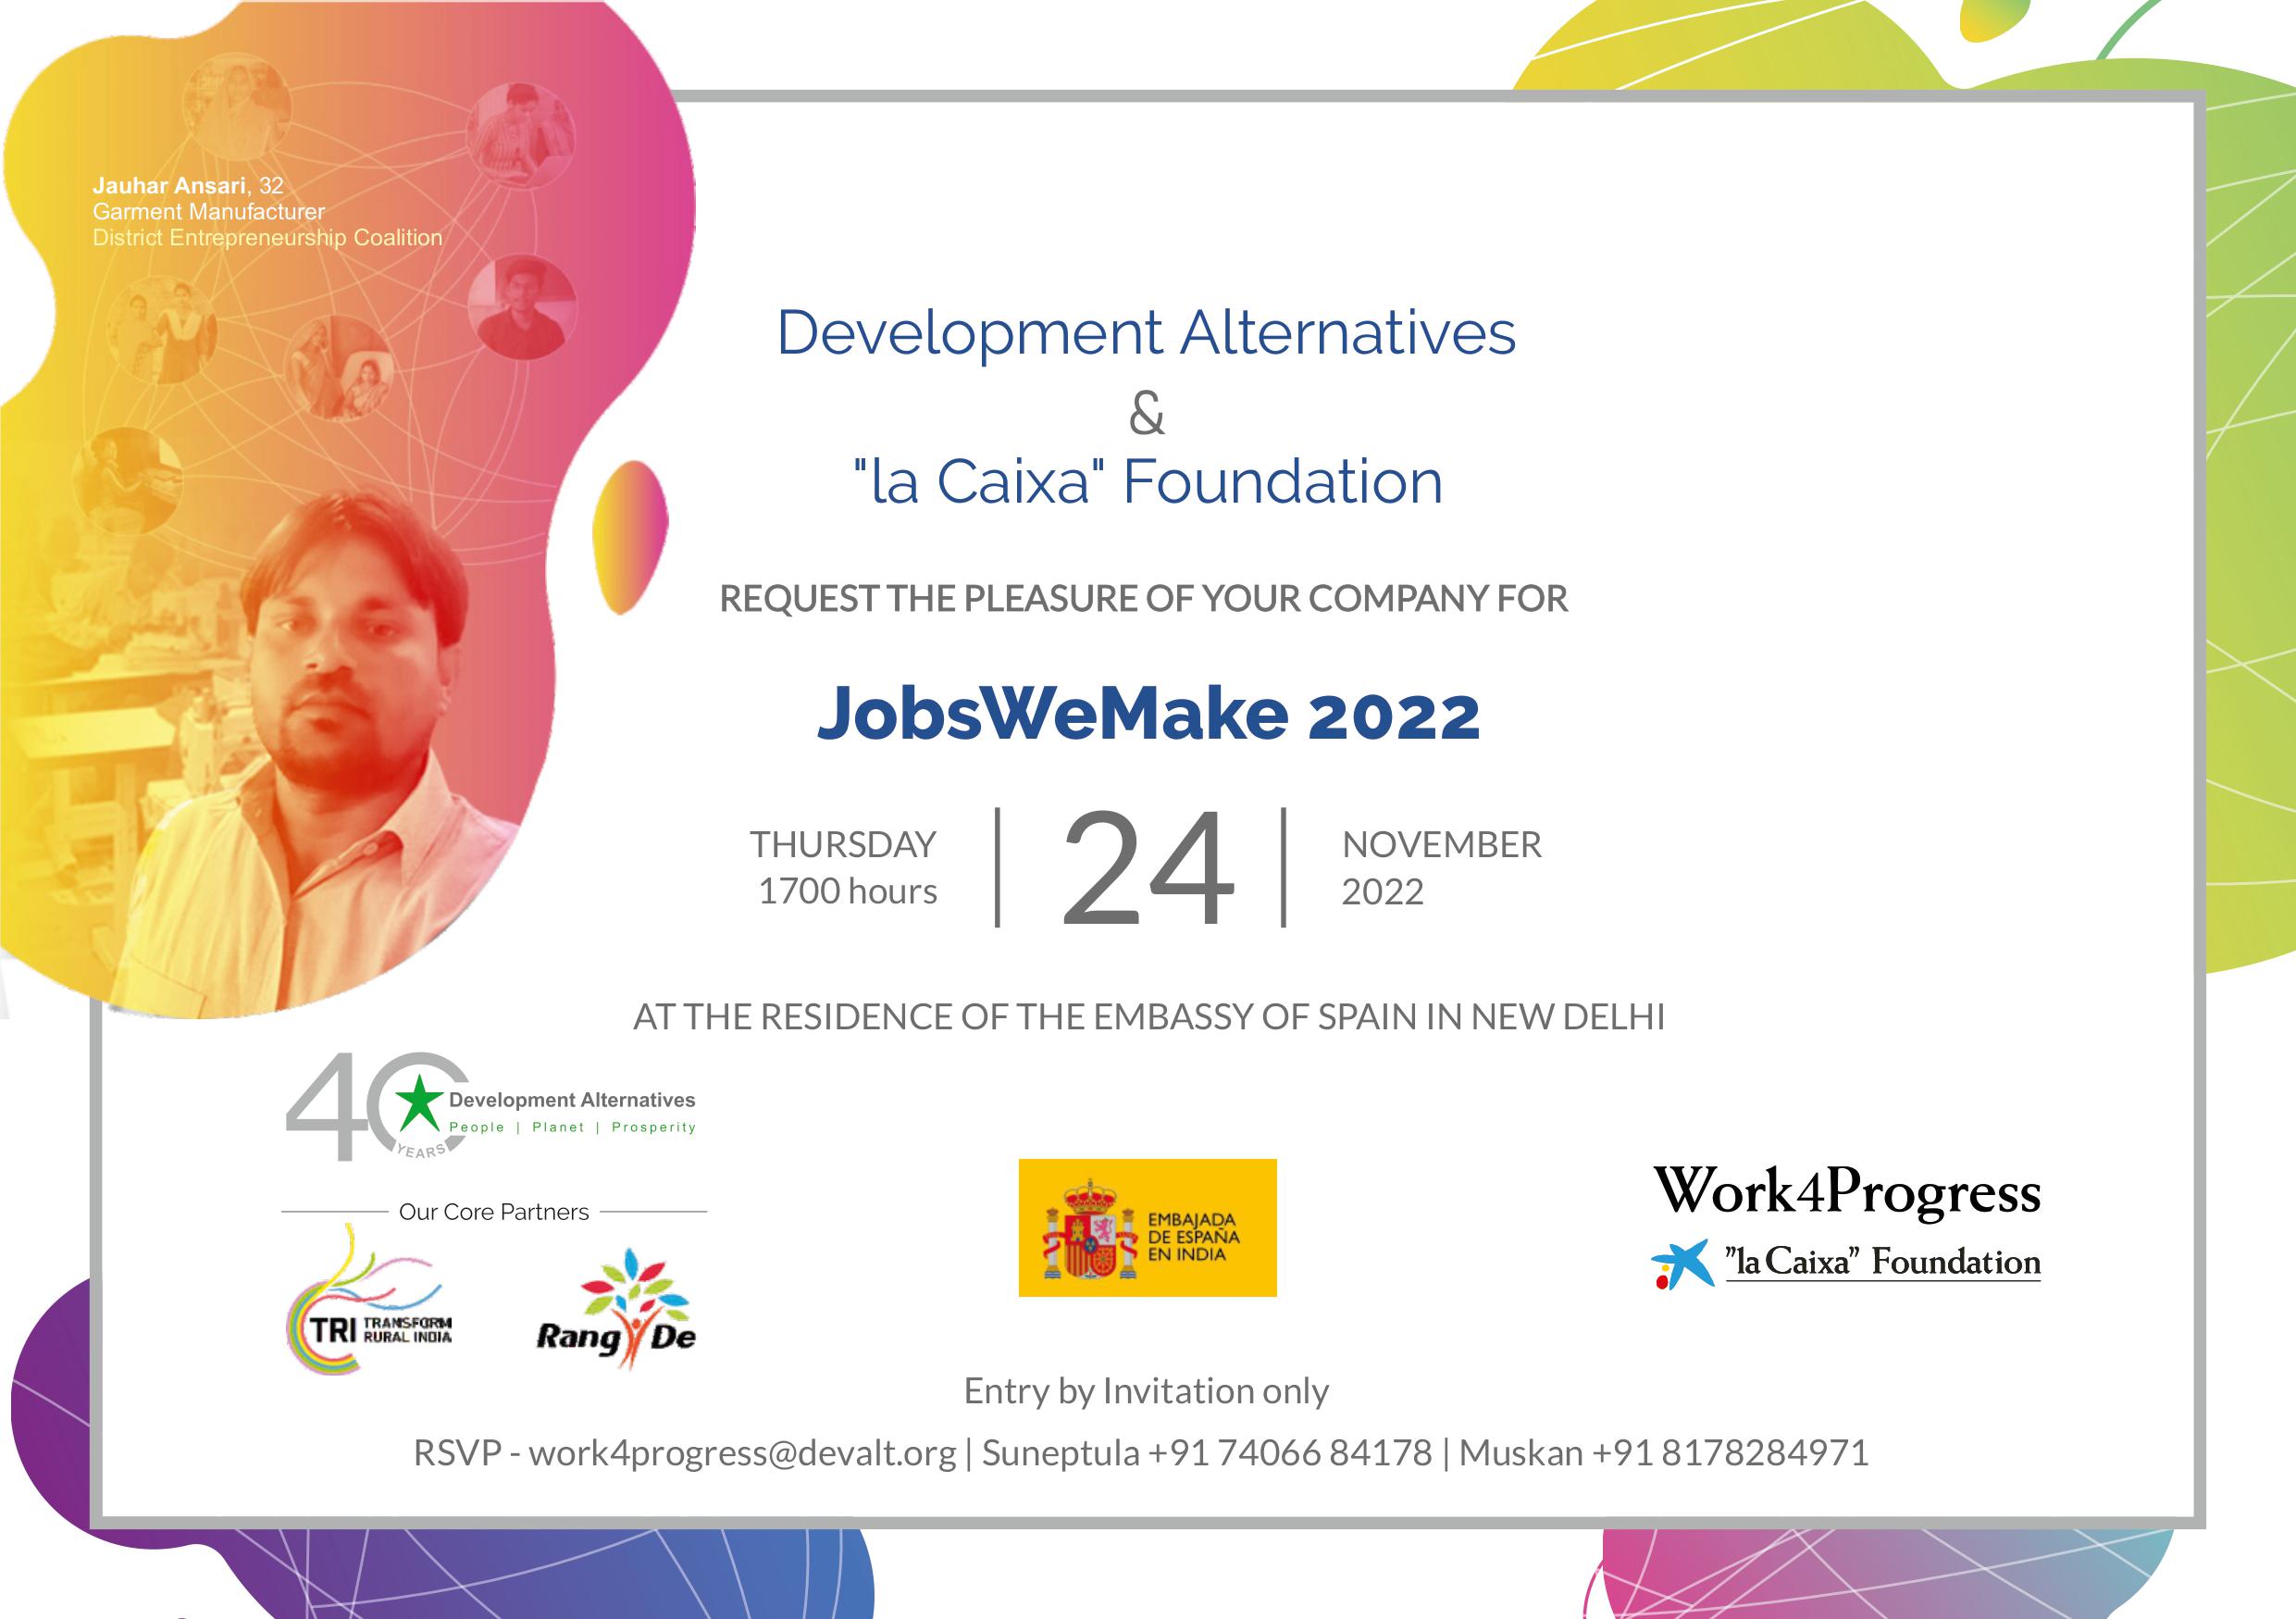 Formal Invite_JobsWeMake 2022